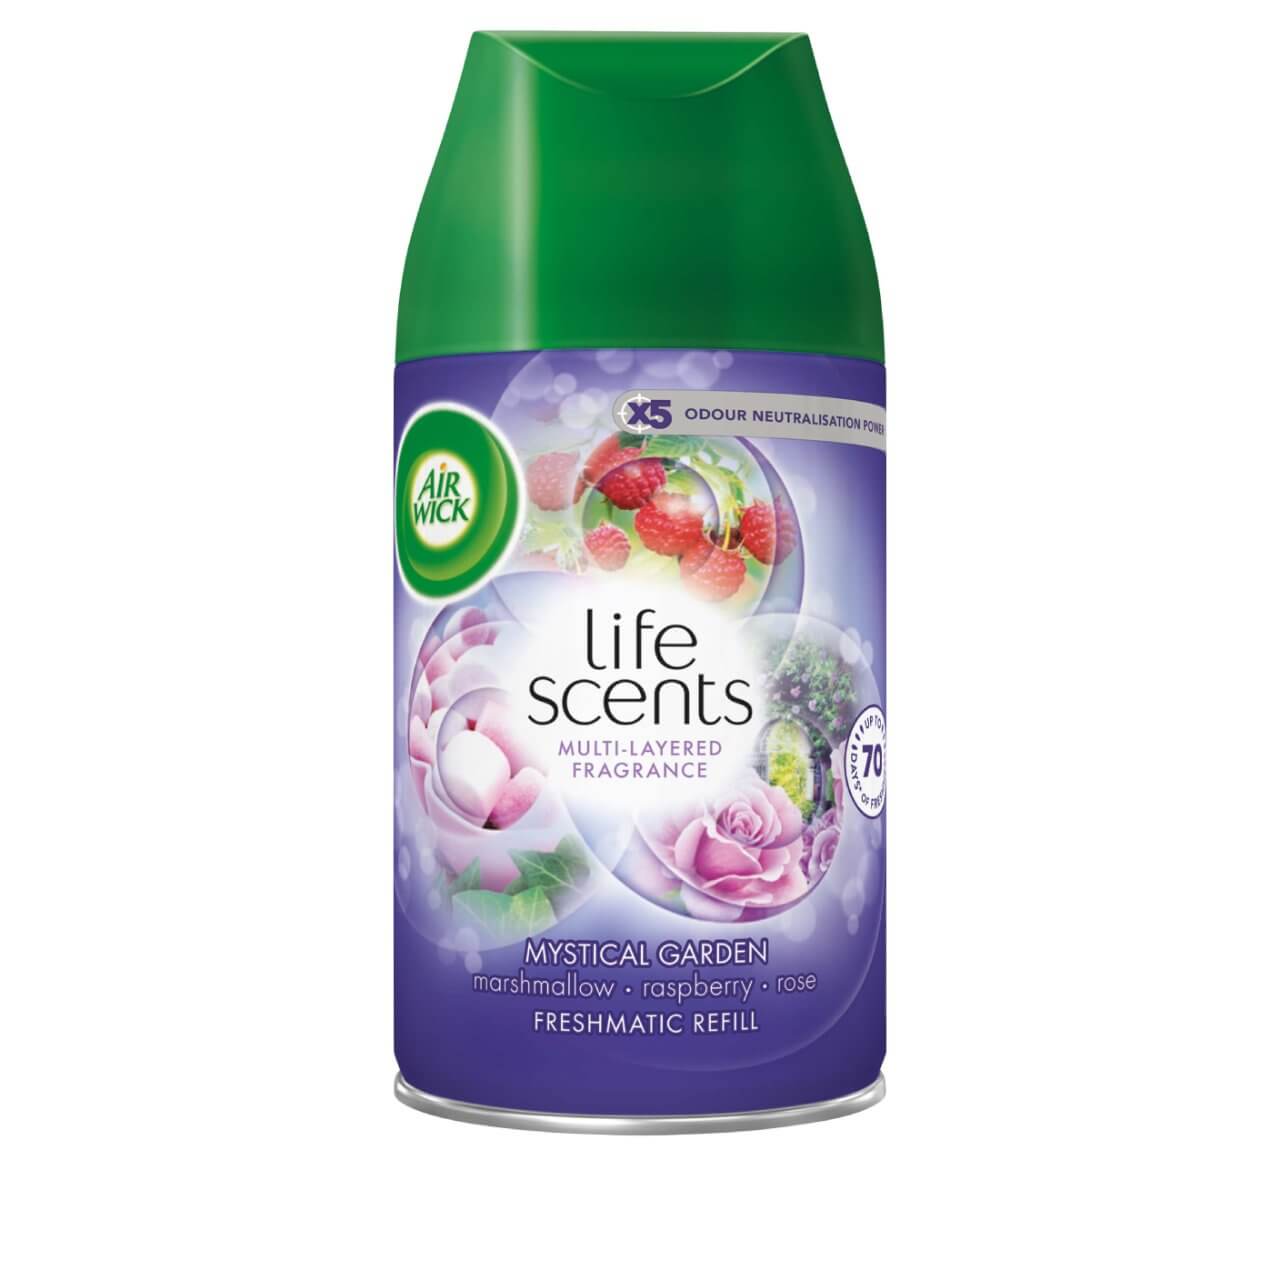 Air Wick Freshmatic Refill Life Scents Mystical Garden 250 ml